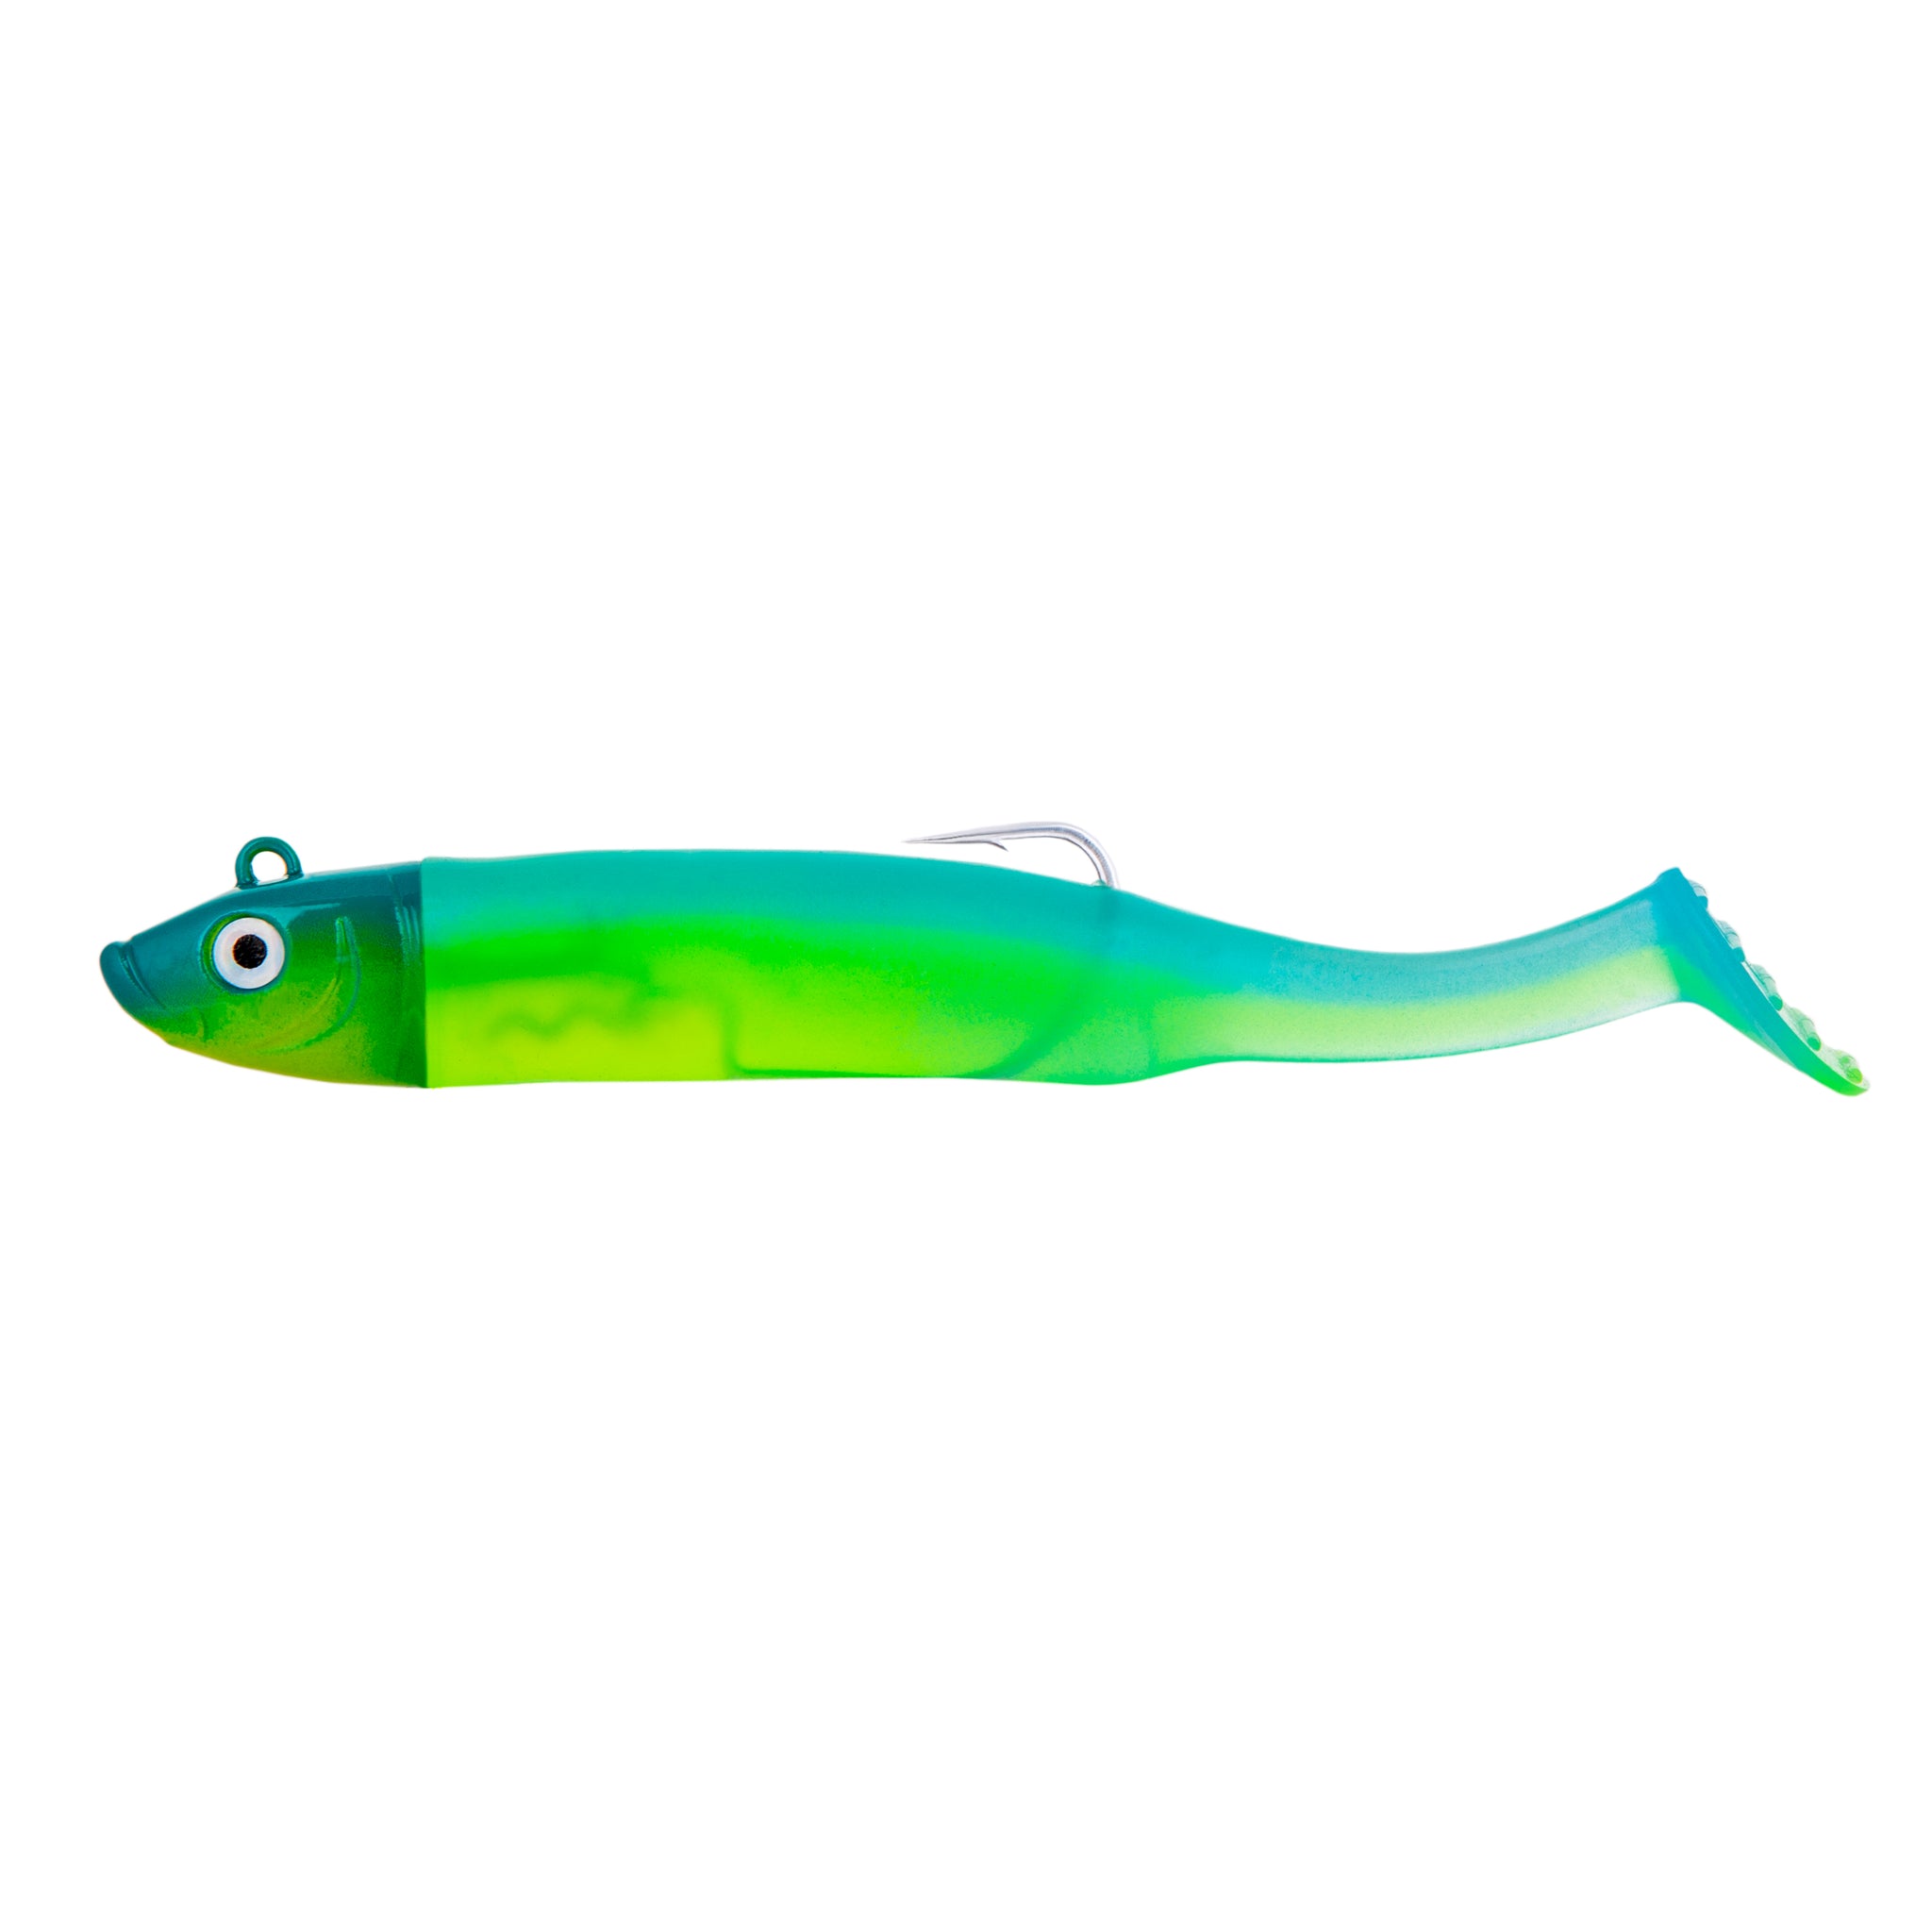 Two Shoal Shads - Blue/Green - Soft Plastic Lure – Drift Fishing